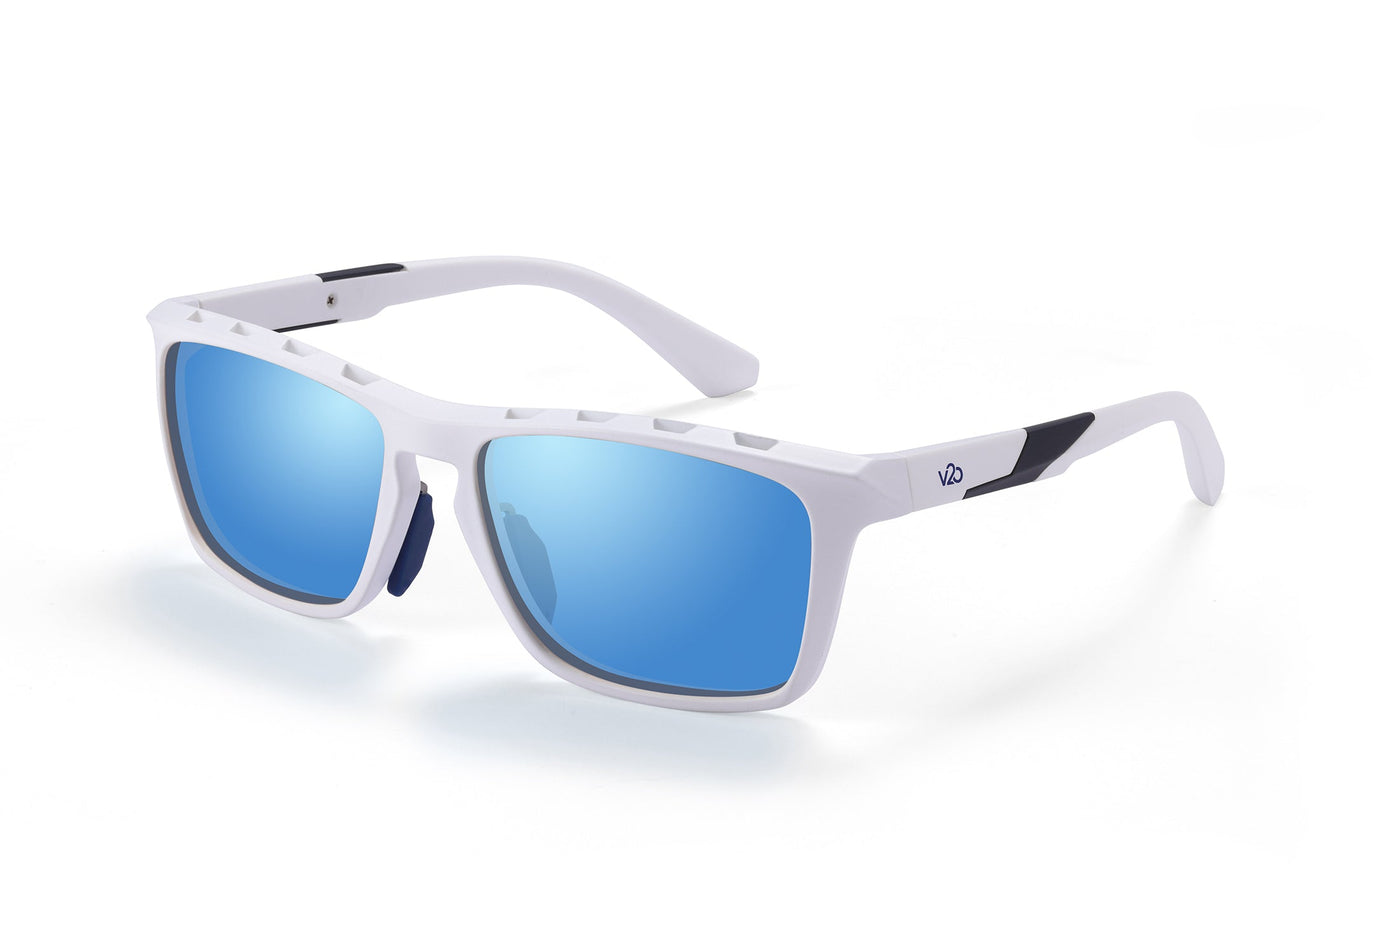 FORTIS - Polarised Blue Mirrored Prescription Sports Glasses